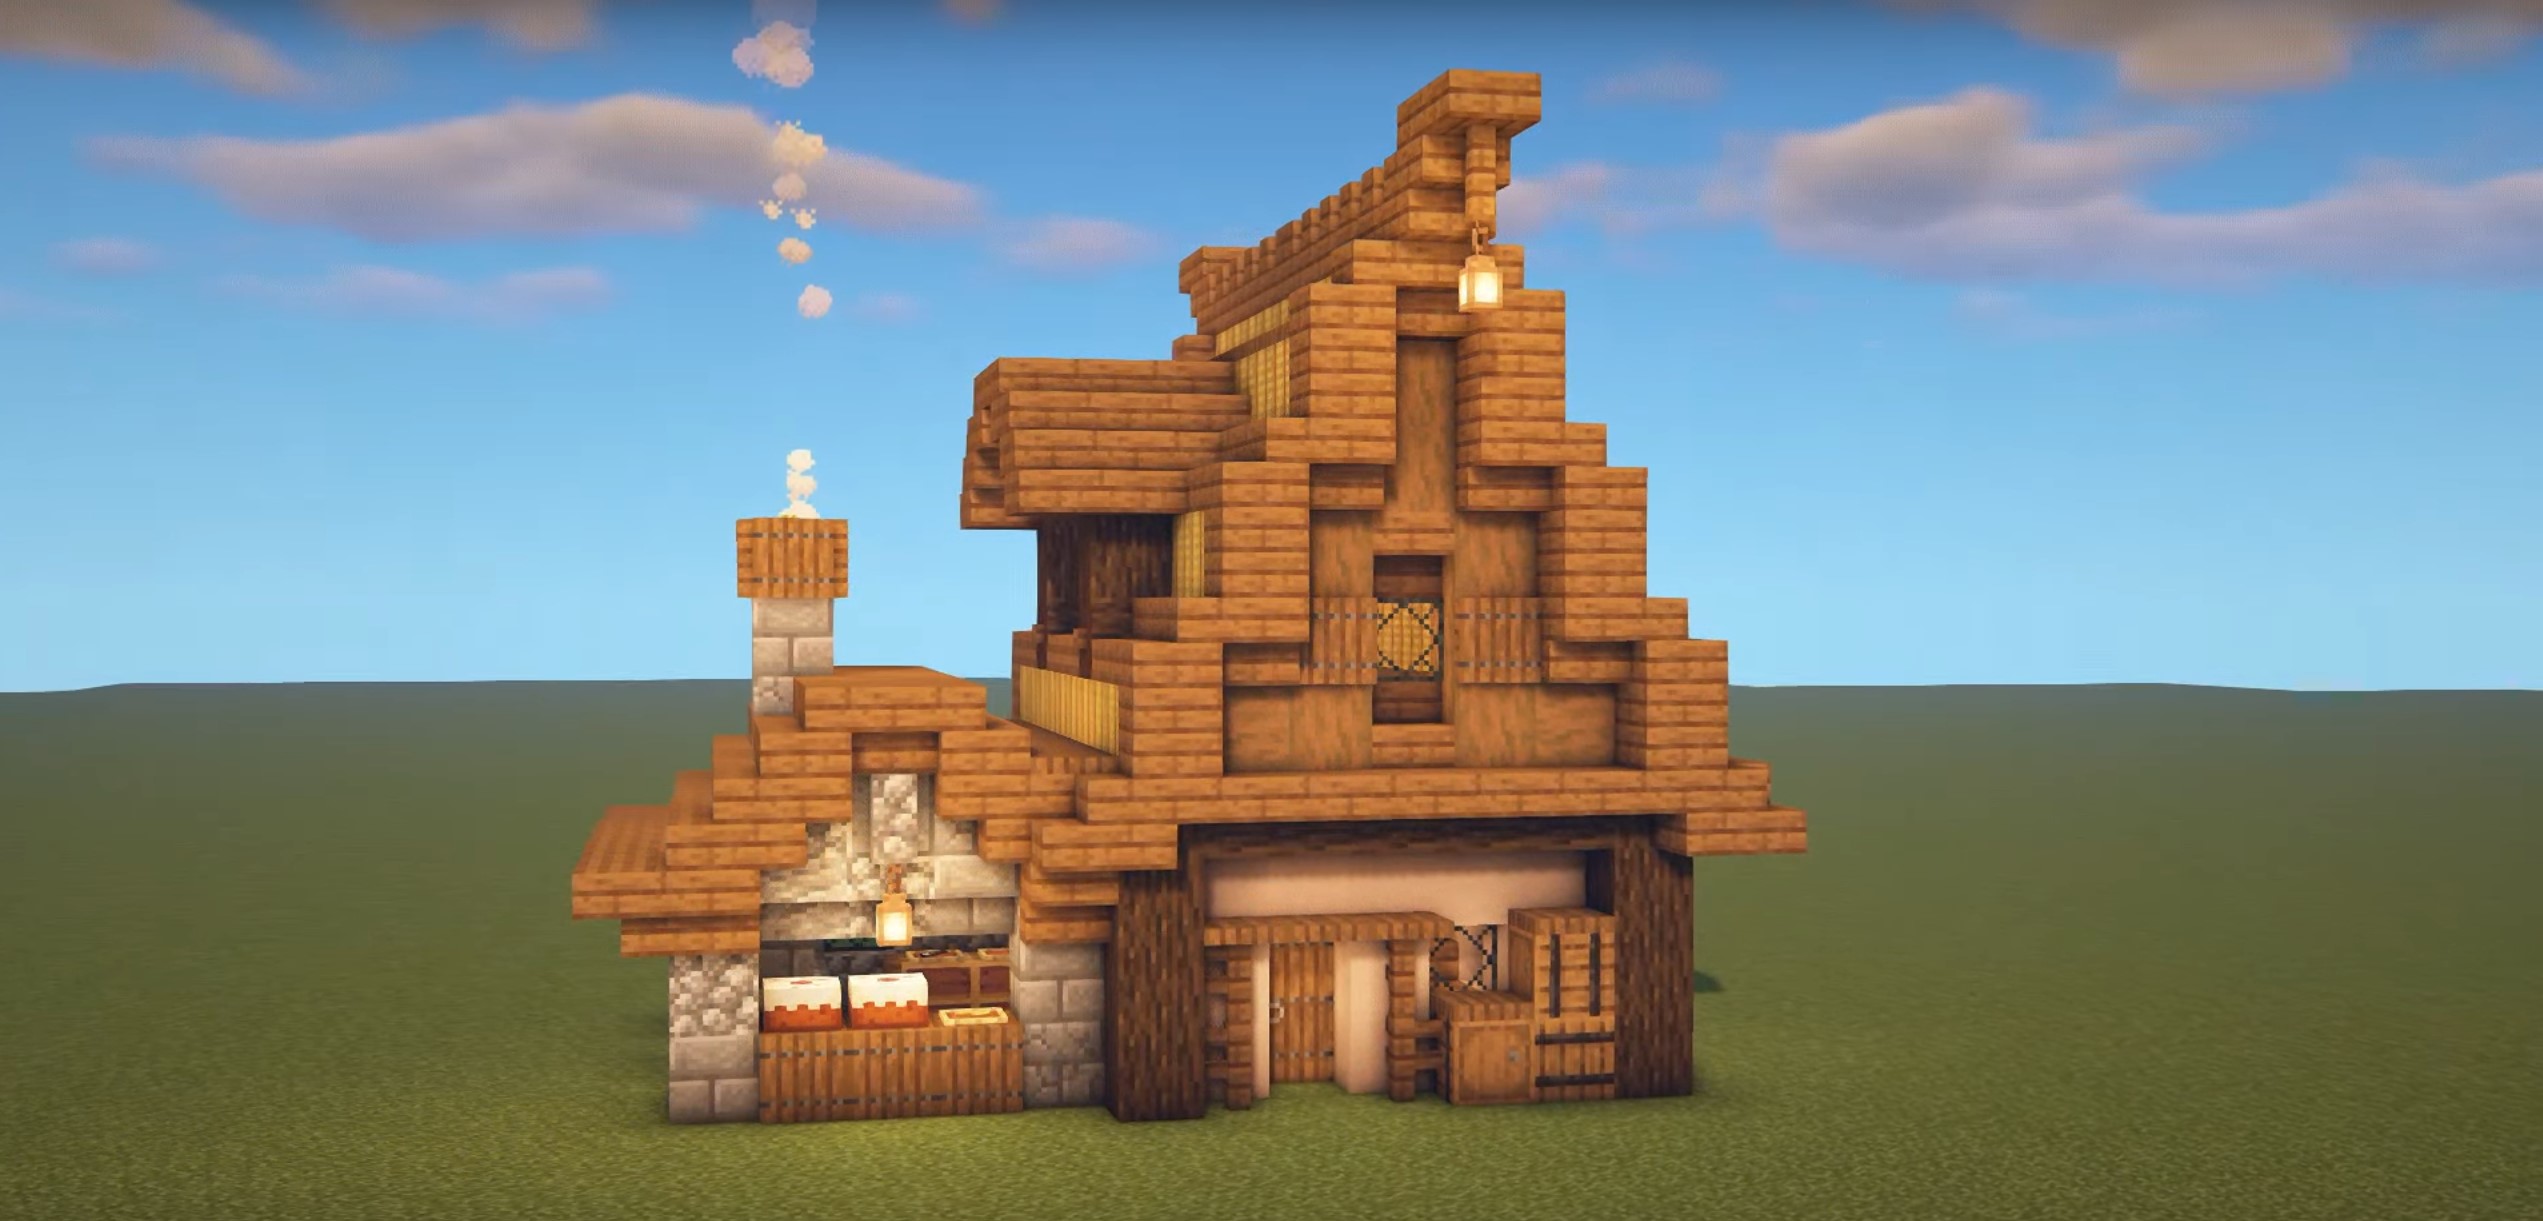 Baker's House minecraft building idea